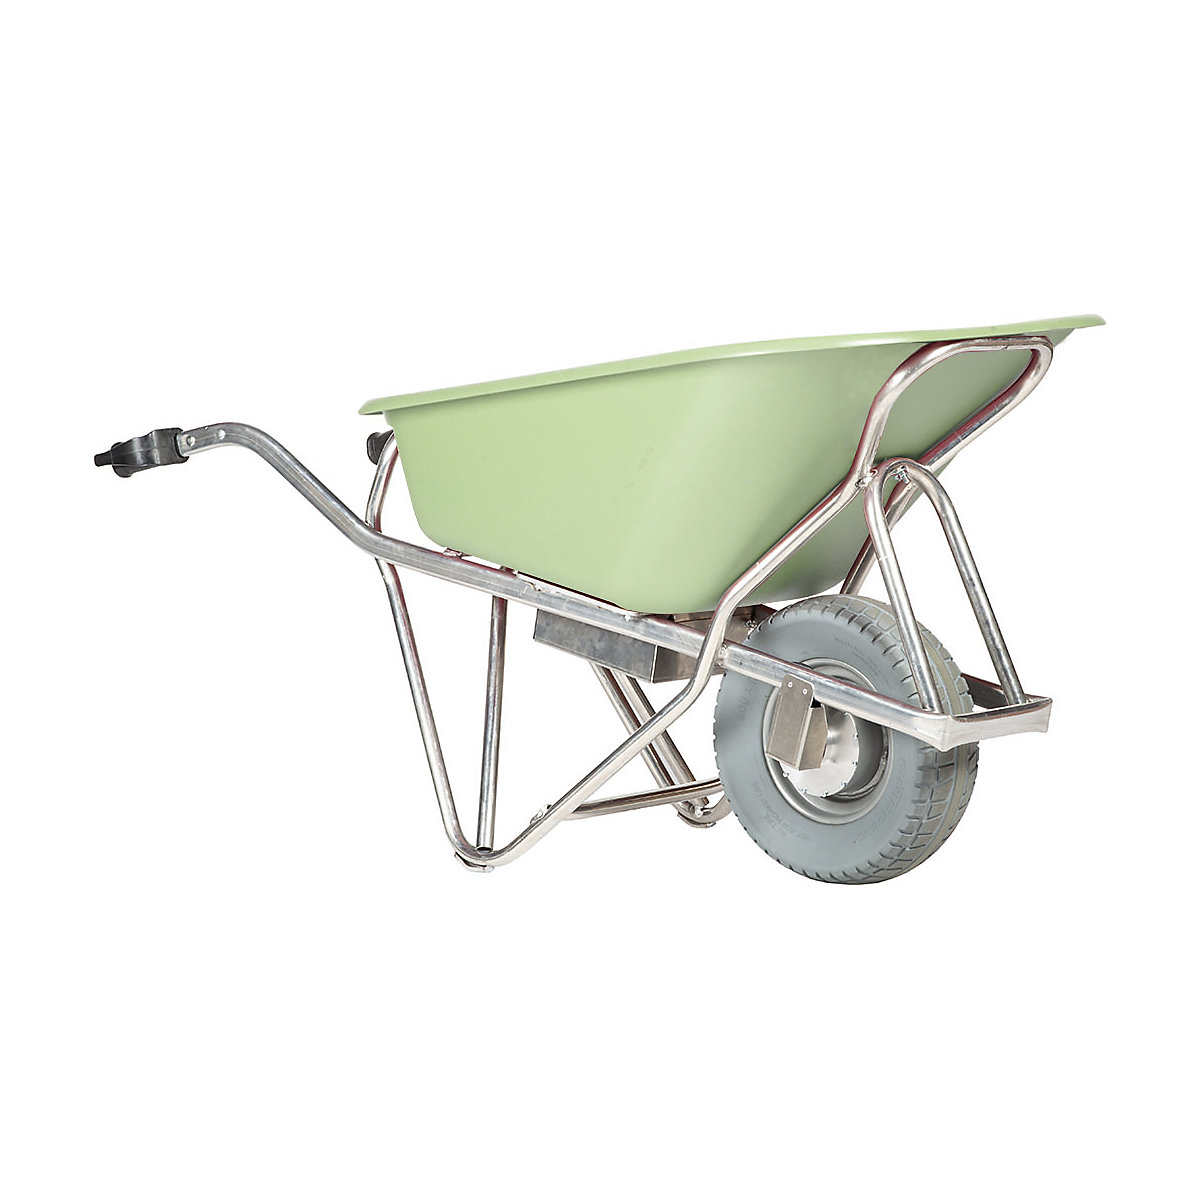 PROFI-MAX electric wheelbarrow – MATADOR, 90 l HDPE tray, green, 2+ items-1